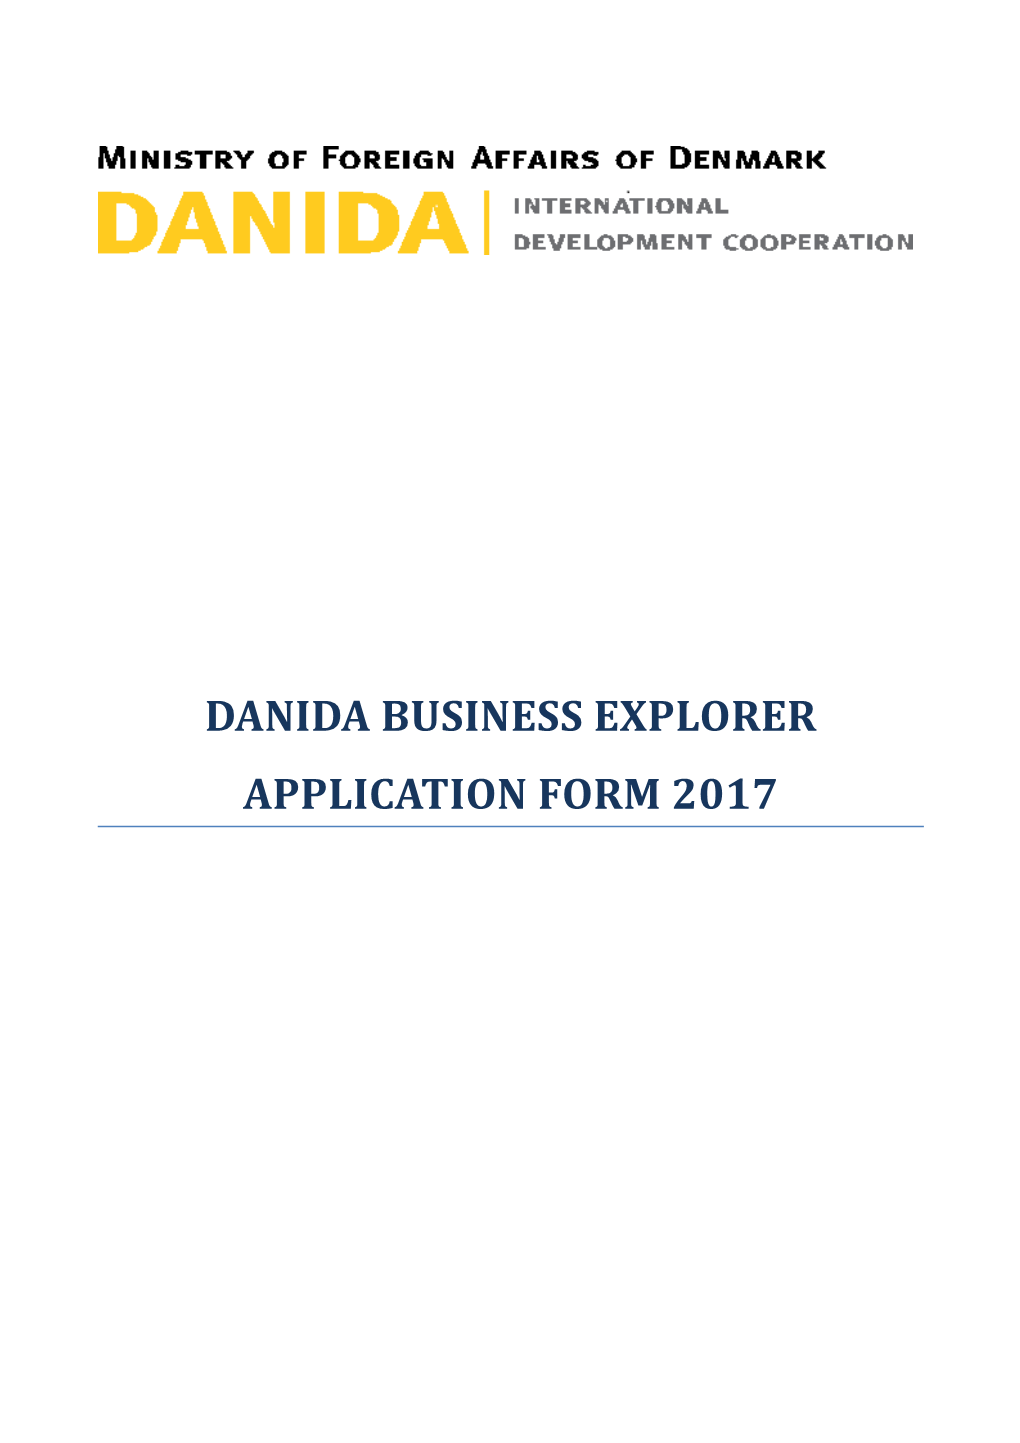 Danida Business Explorer